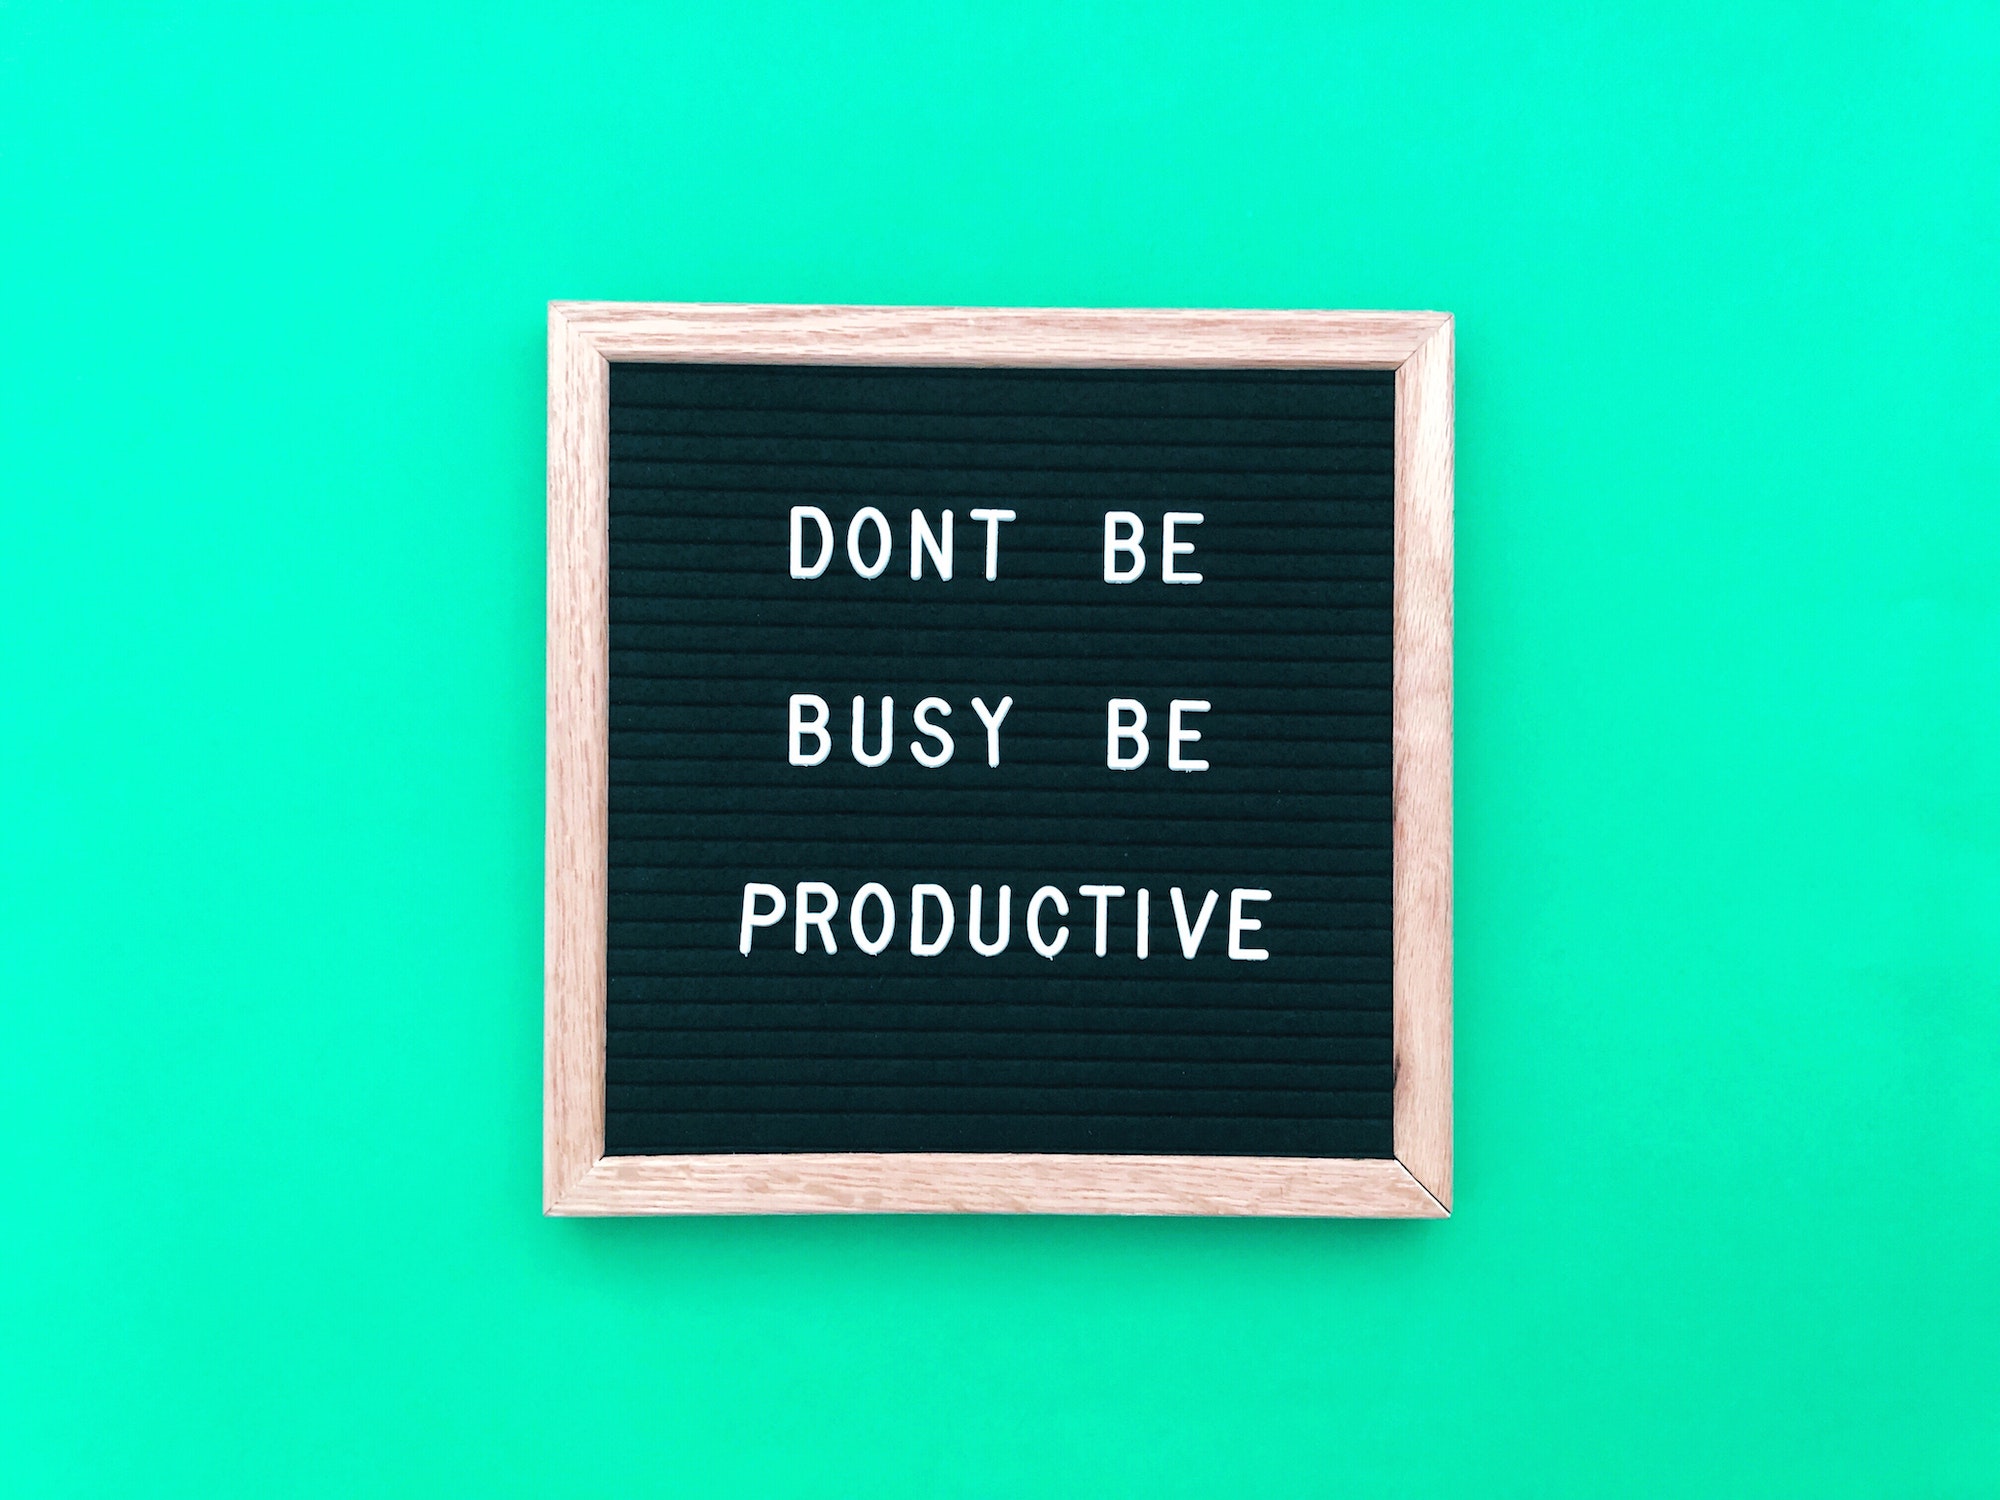 Productivity quote